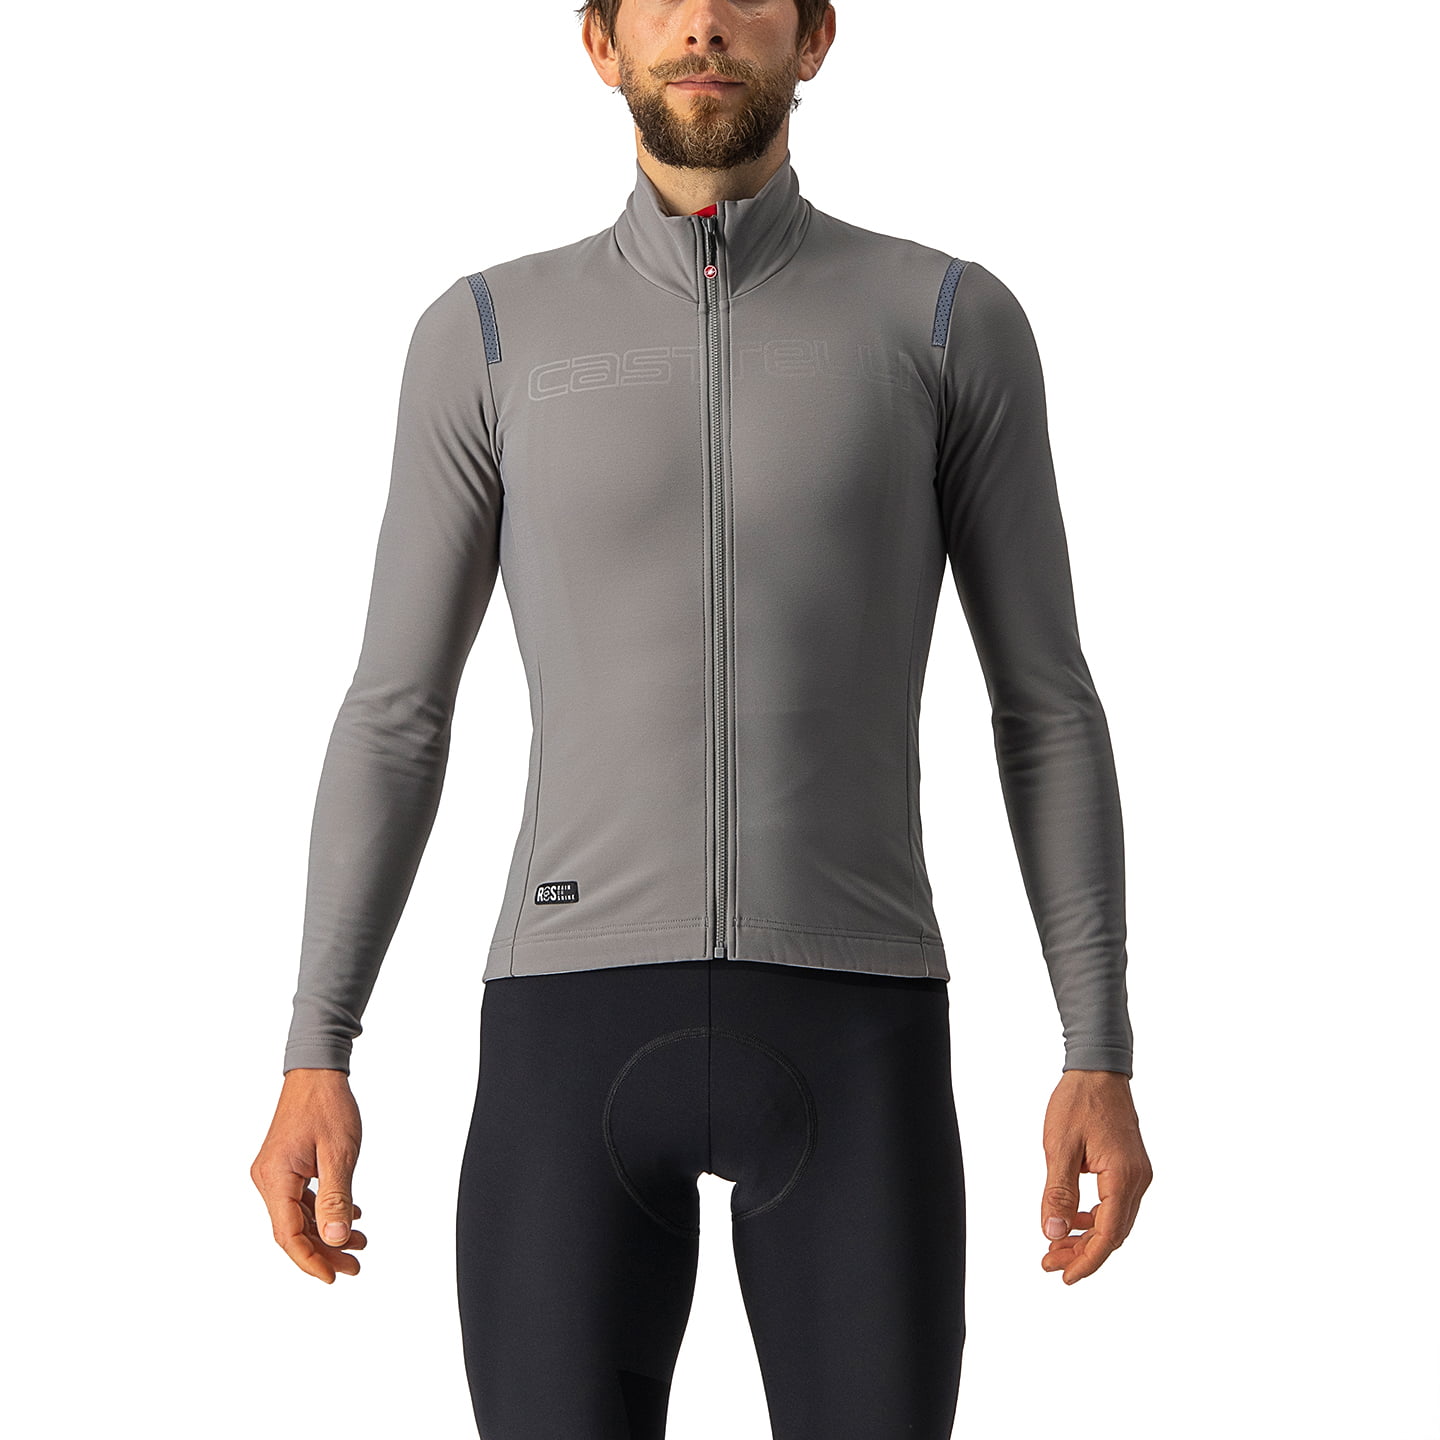 CASTELLI Tutto Nano RoS Light Jacket Jersey / Jacket, for men, size M, Bike jacket, Cycling clothing